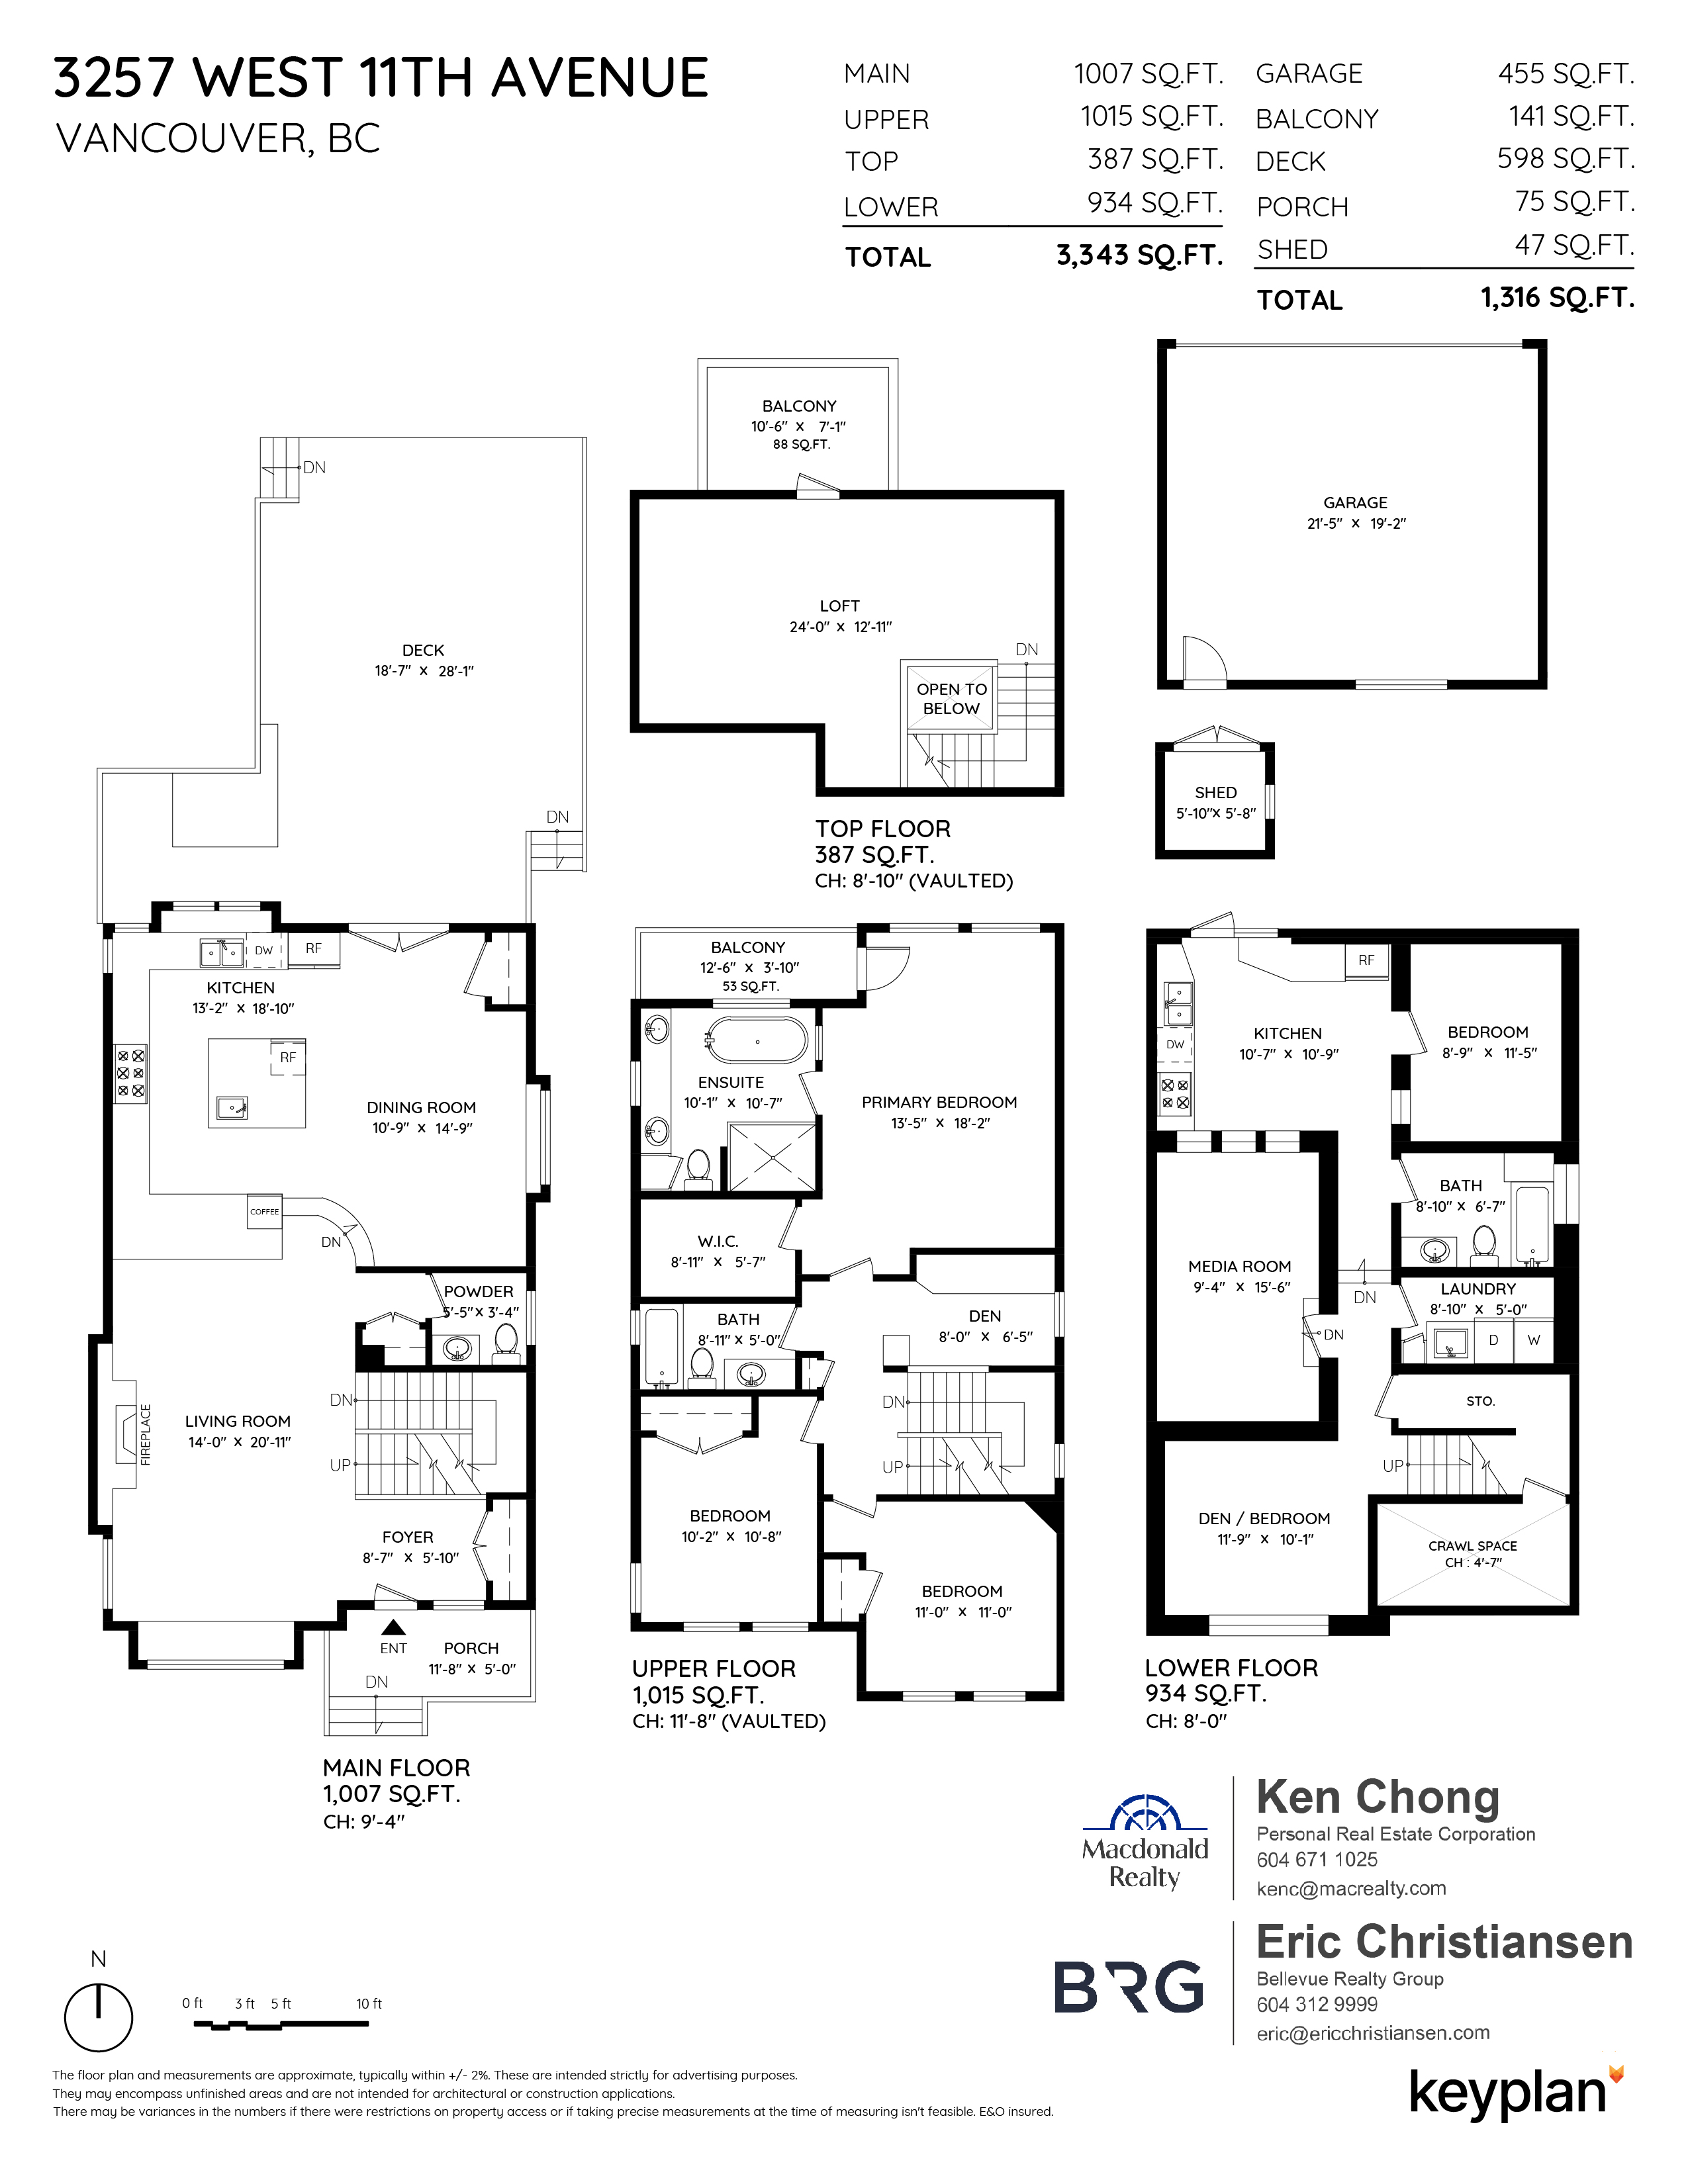 Eric Christiansen - 3257 West 11th Avenue, Vancouver, BC, Canada | Floor Plan 1